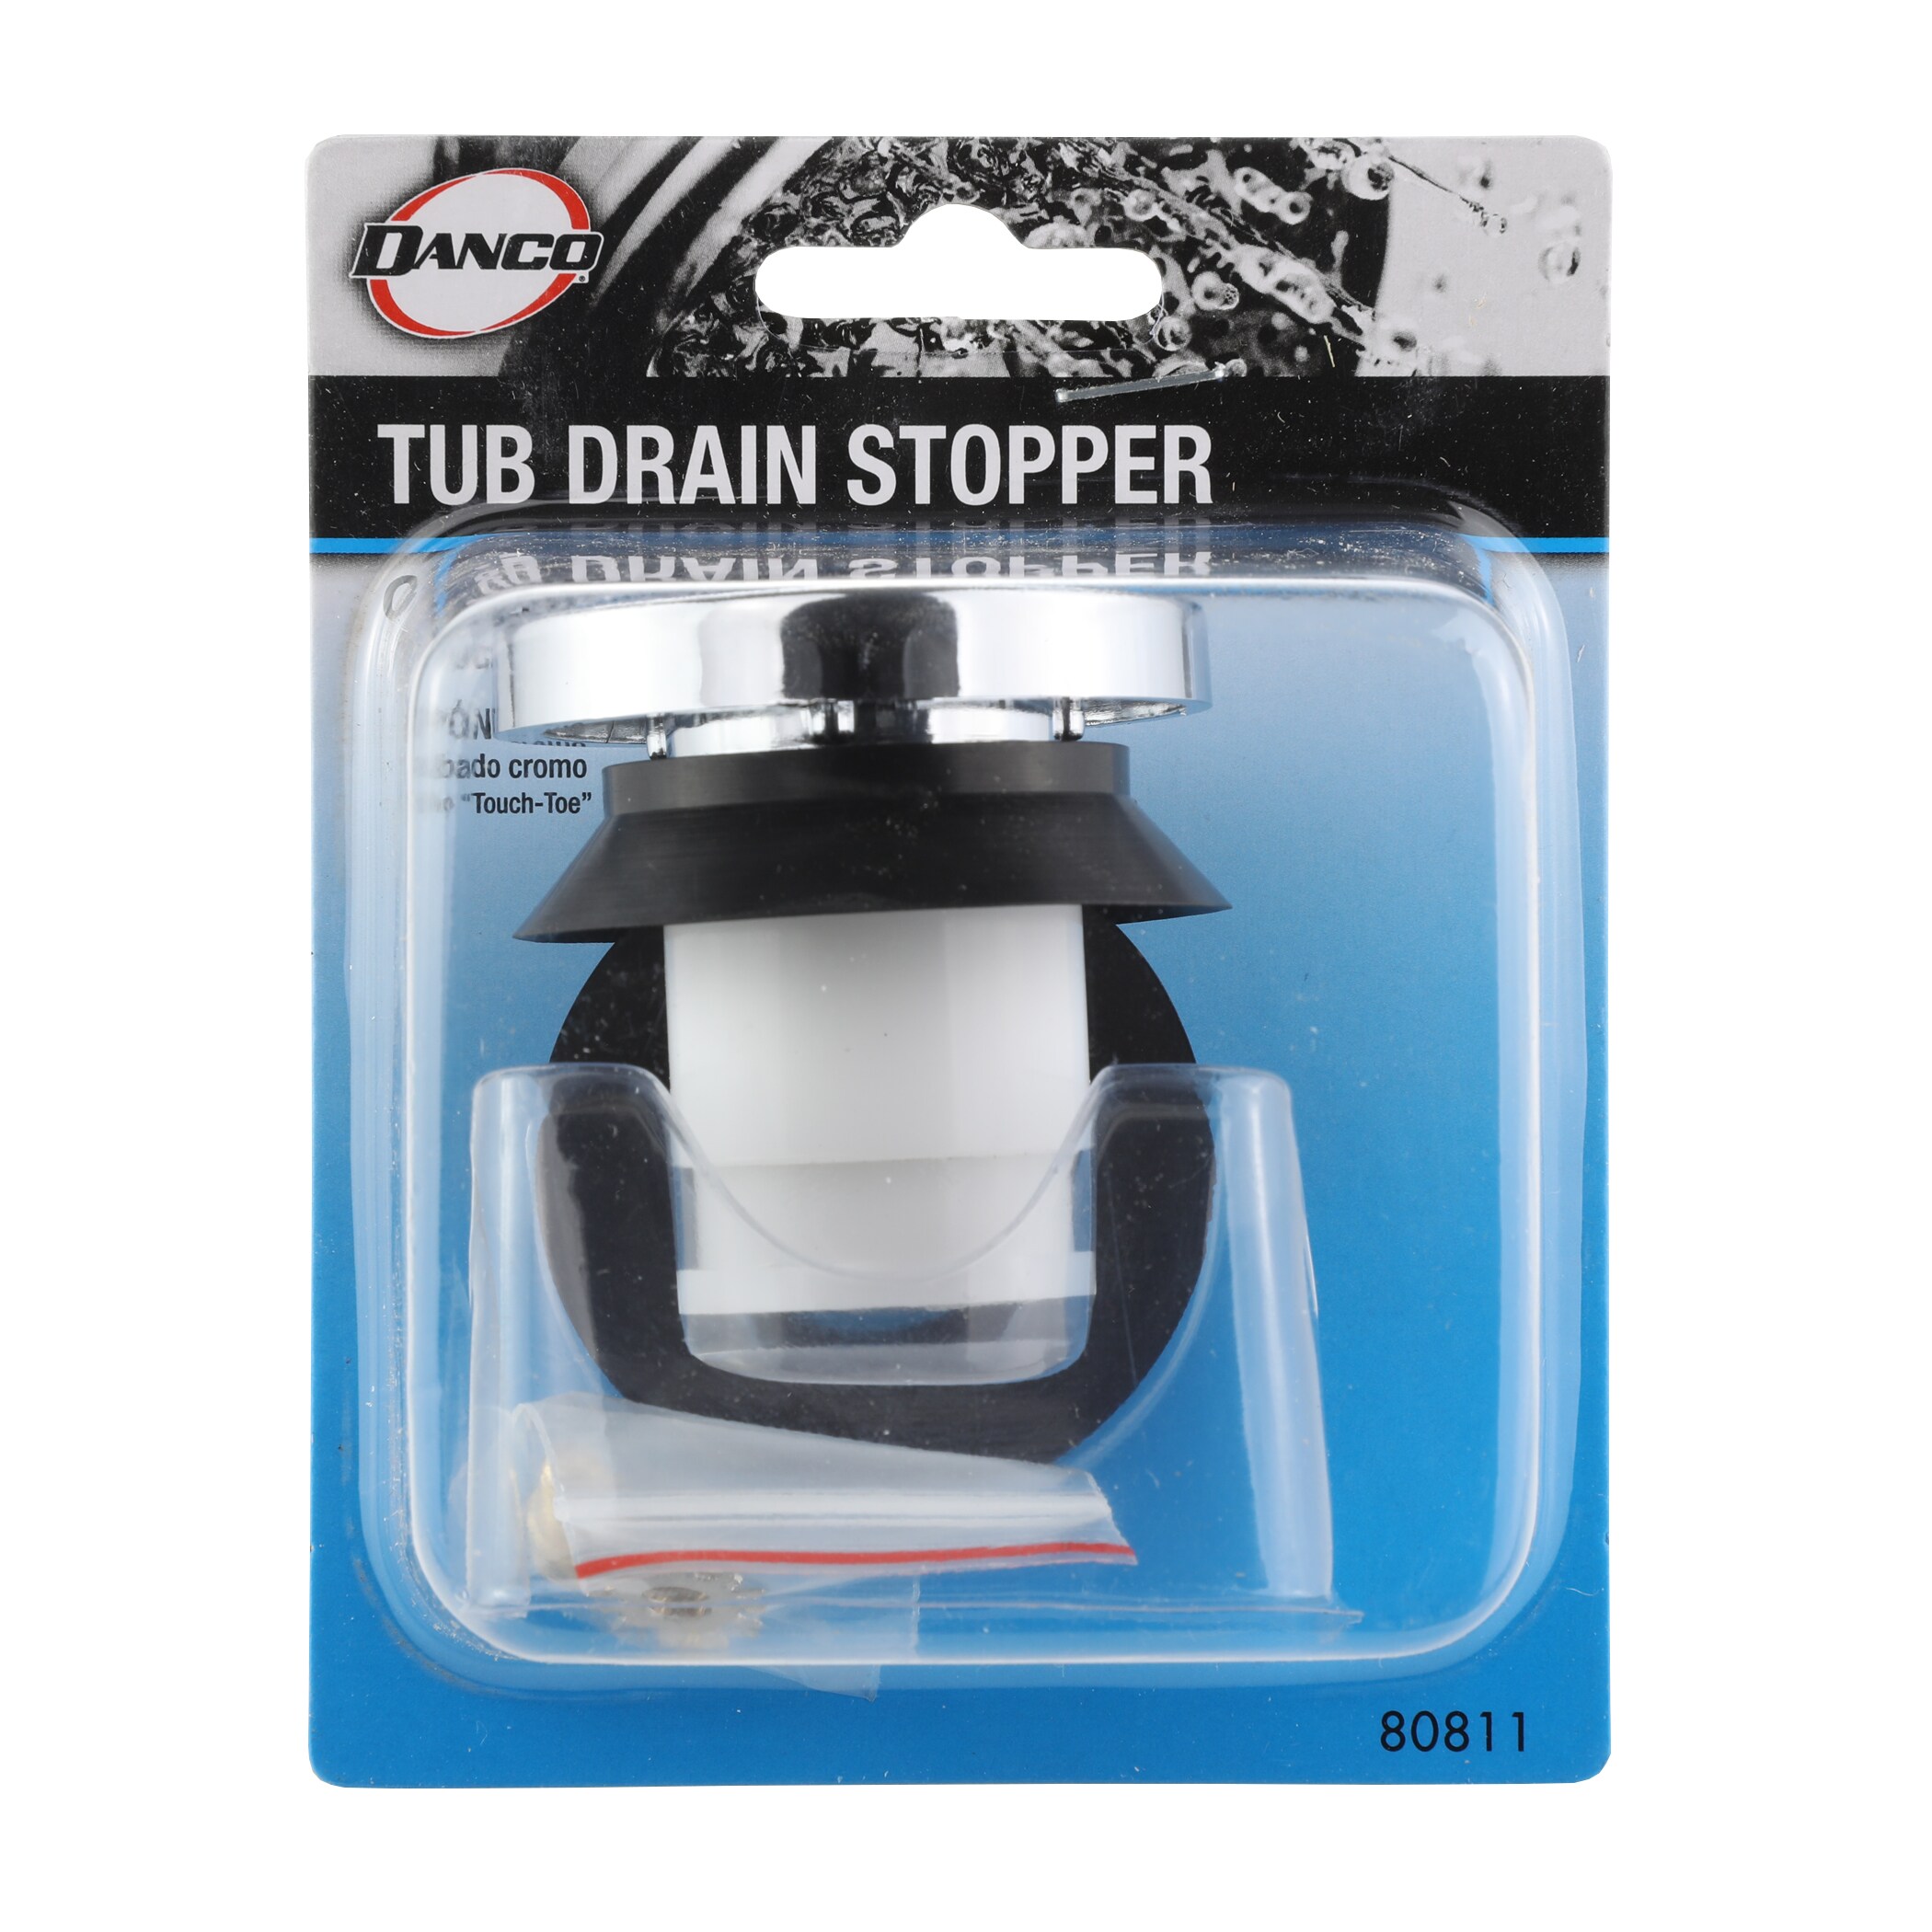 Dia Danco  5/16 in Tub Drain Stopper  Plastic  Brushed Nickel 